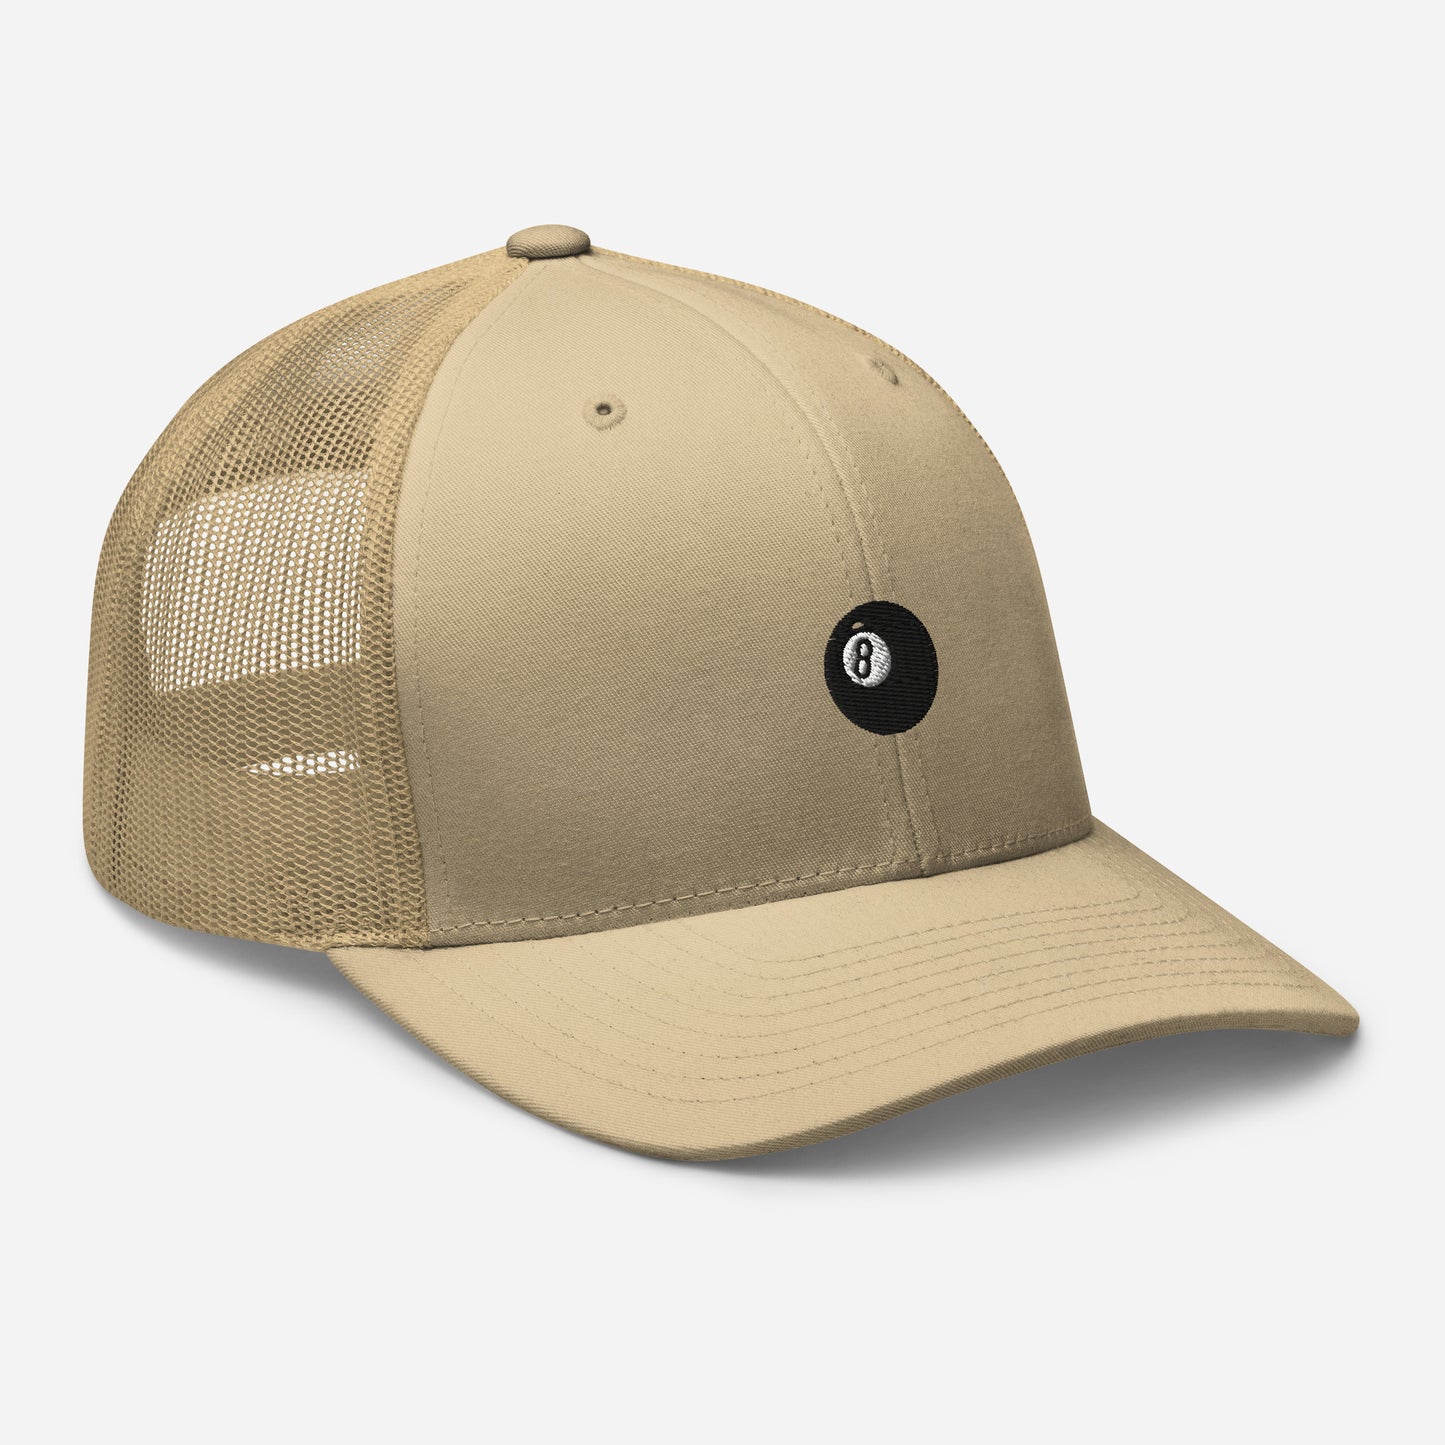 Mesh Cap with 8 Ball Symbol